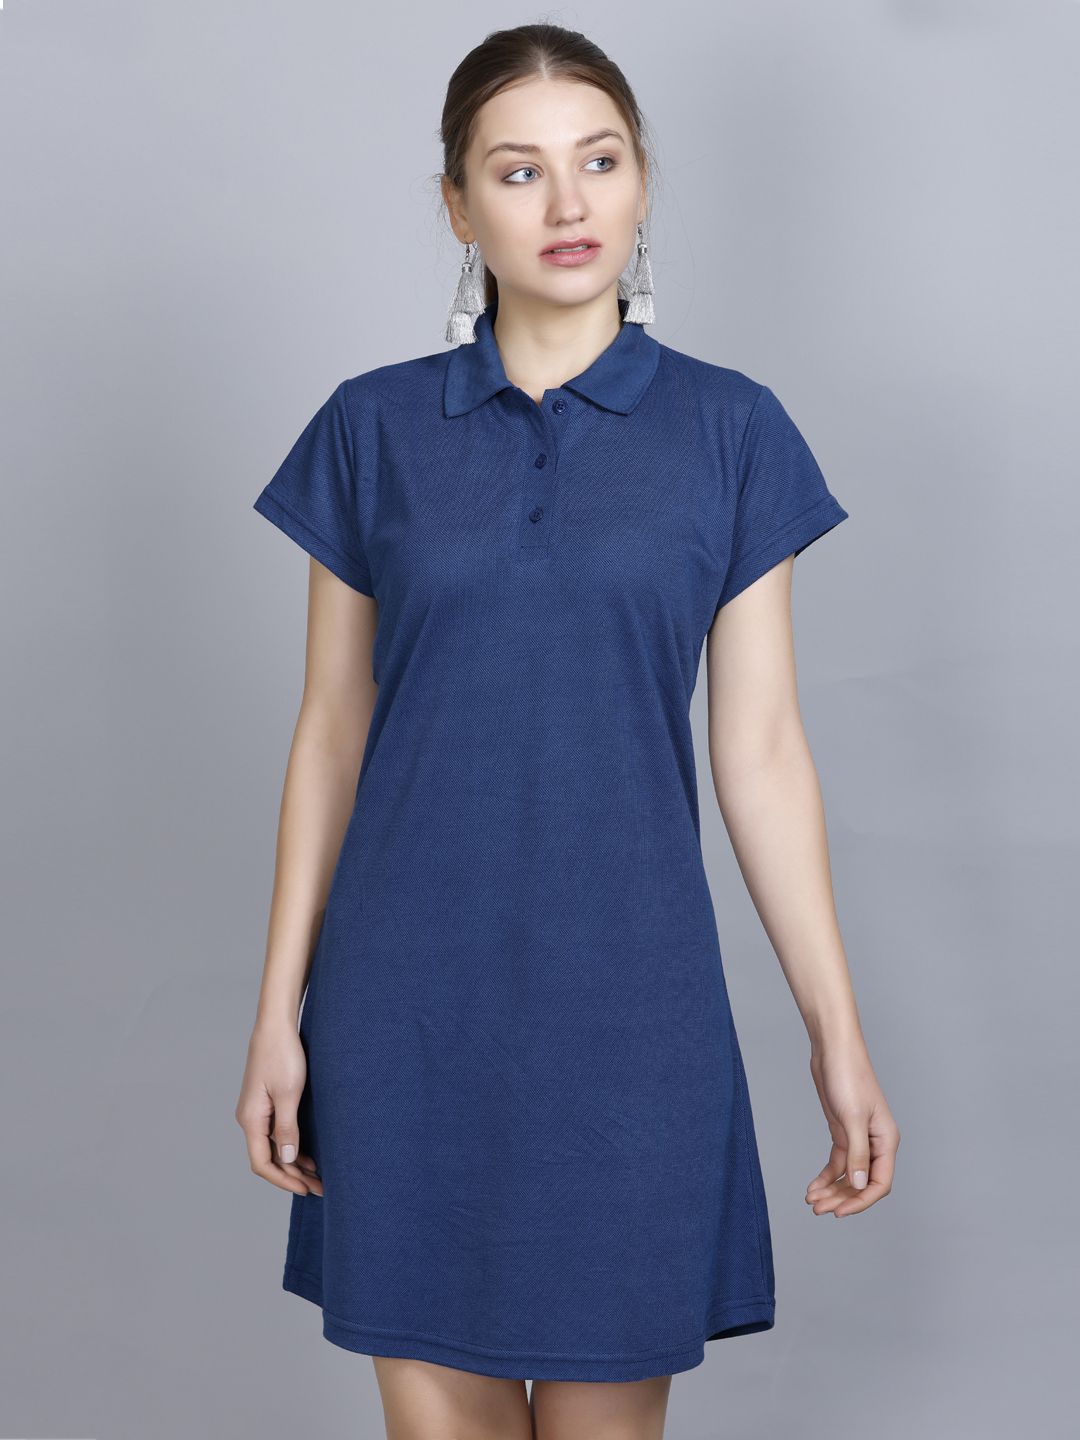     			OBAAN Cotton Blend Solid Above Knee Women's T-shirt Dress - Blue ( Pack of 1 )